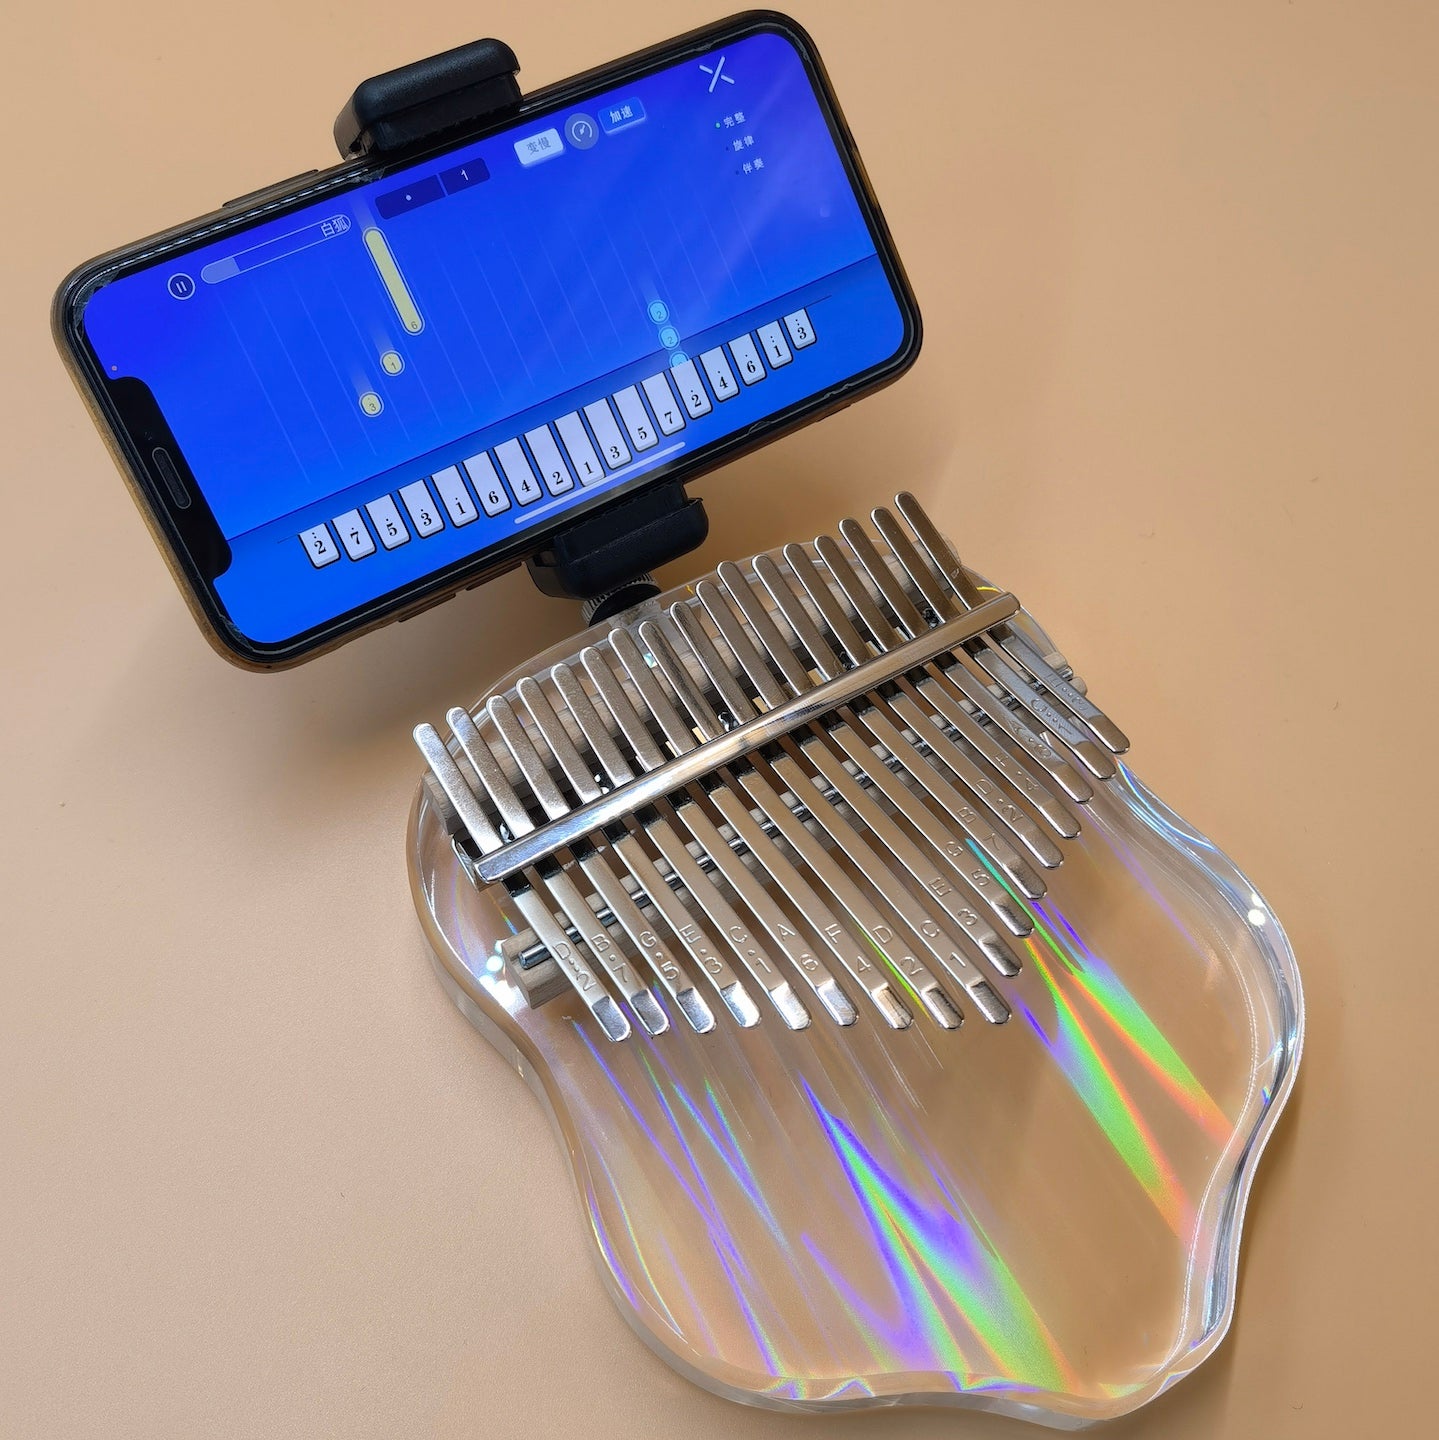 Jooleer 17 Keys Jellyfish Transparent Acrylic Kalimba with Smartphone